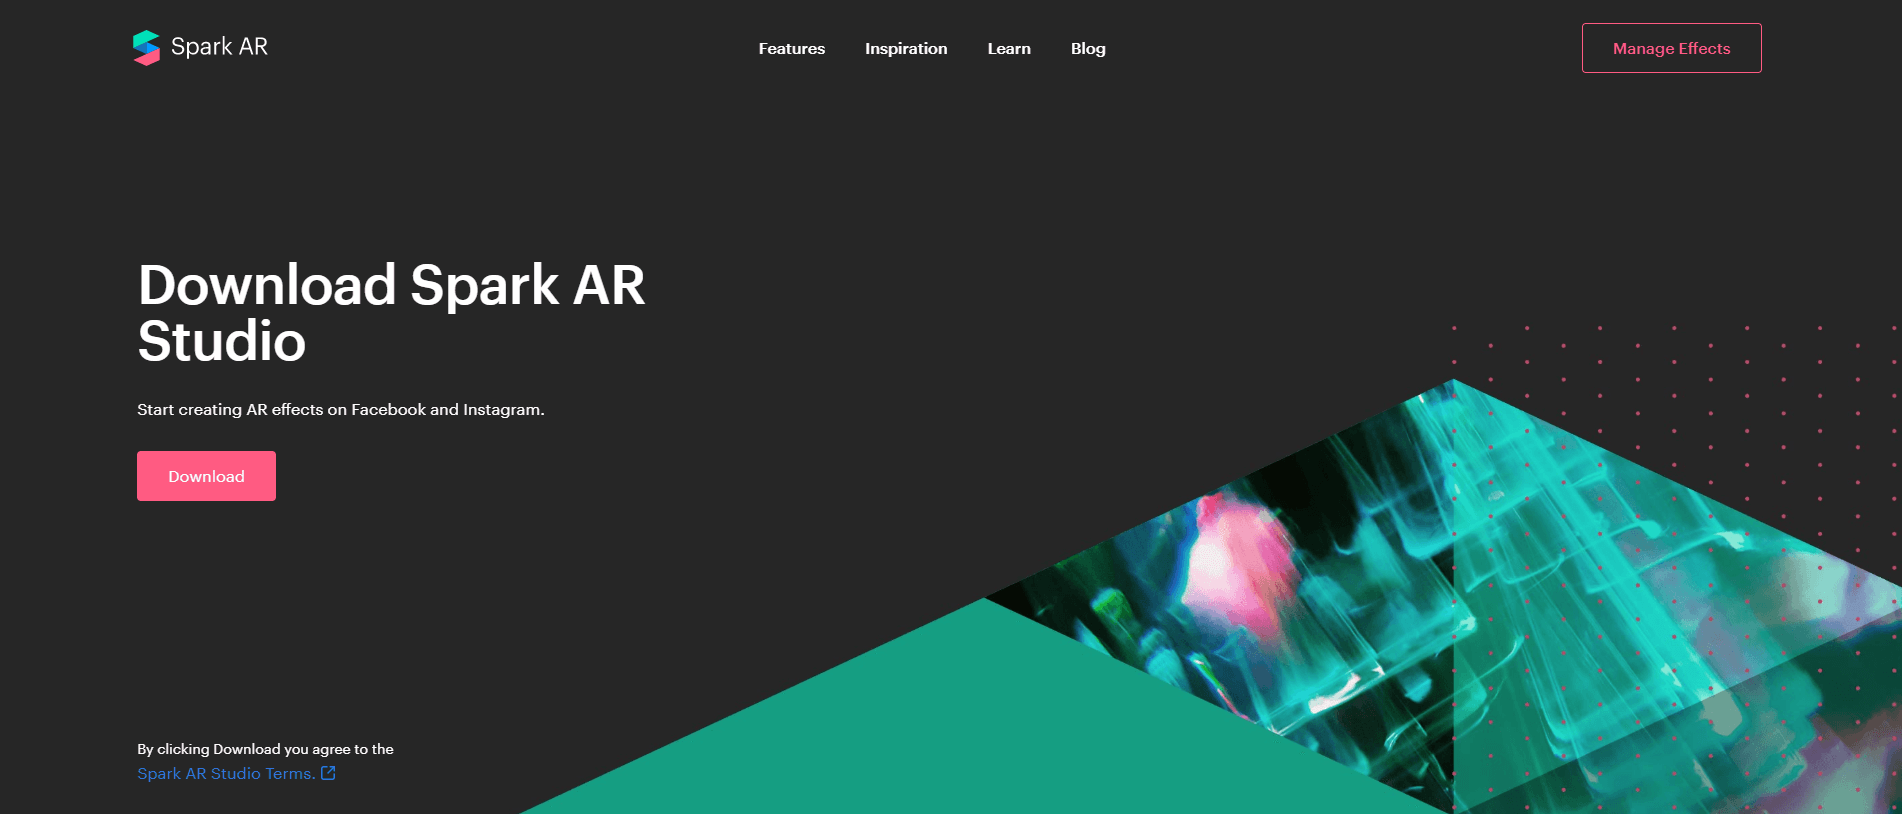 Spark AR Studio download